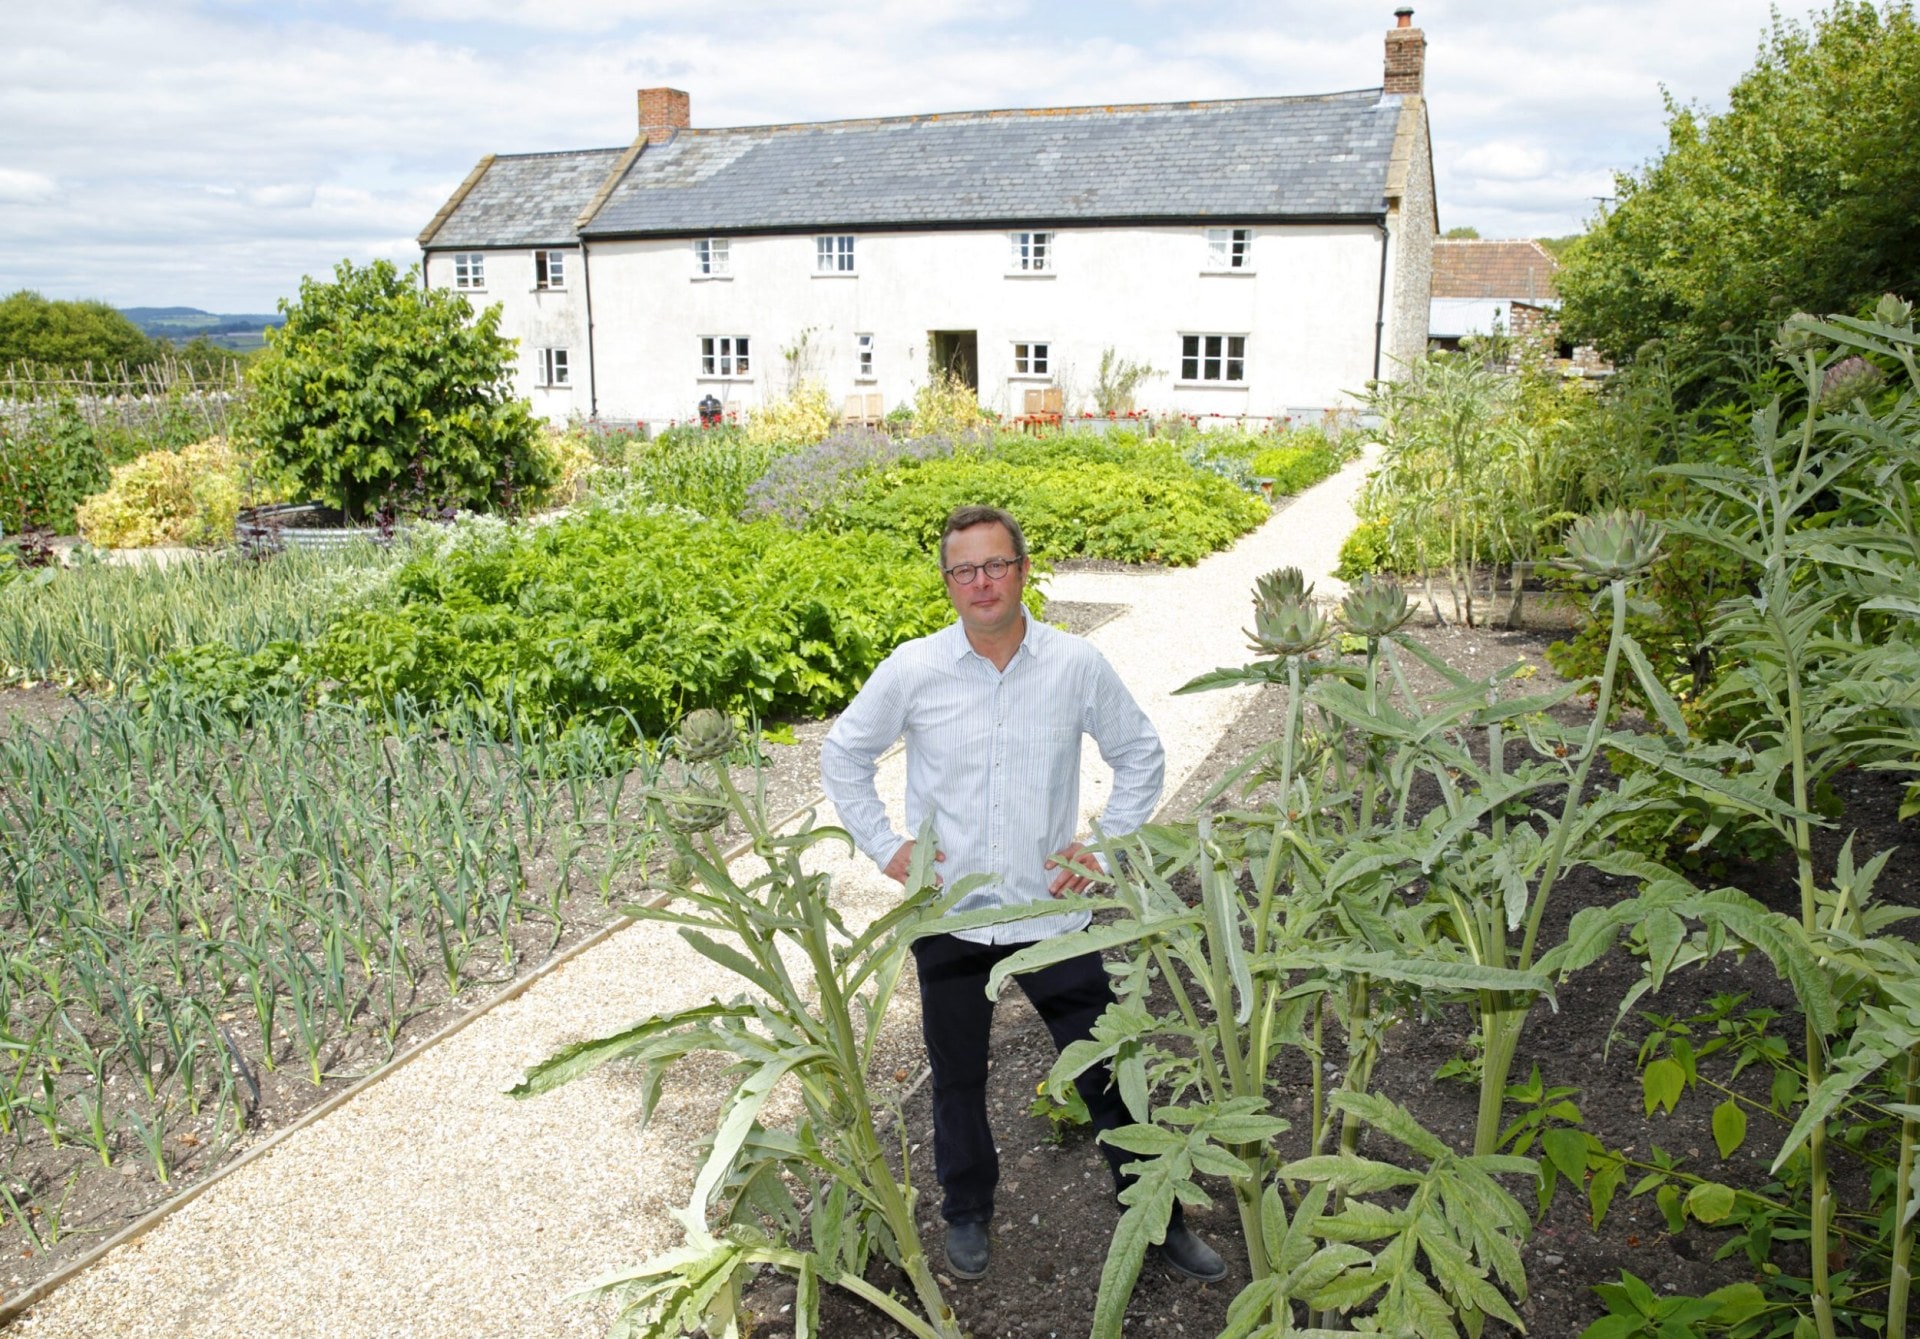 Hugh Fearnley-Whittingstall standing in garden